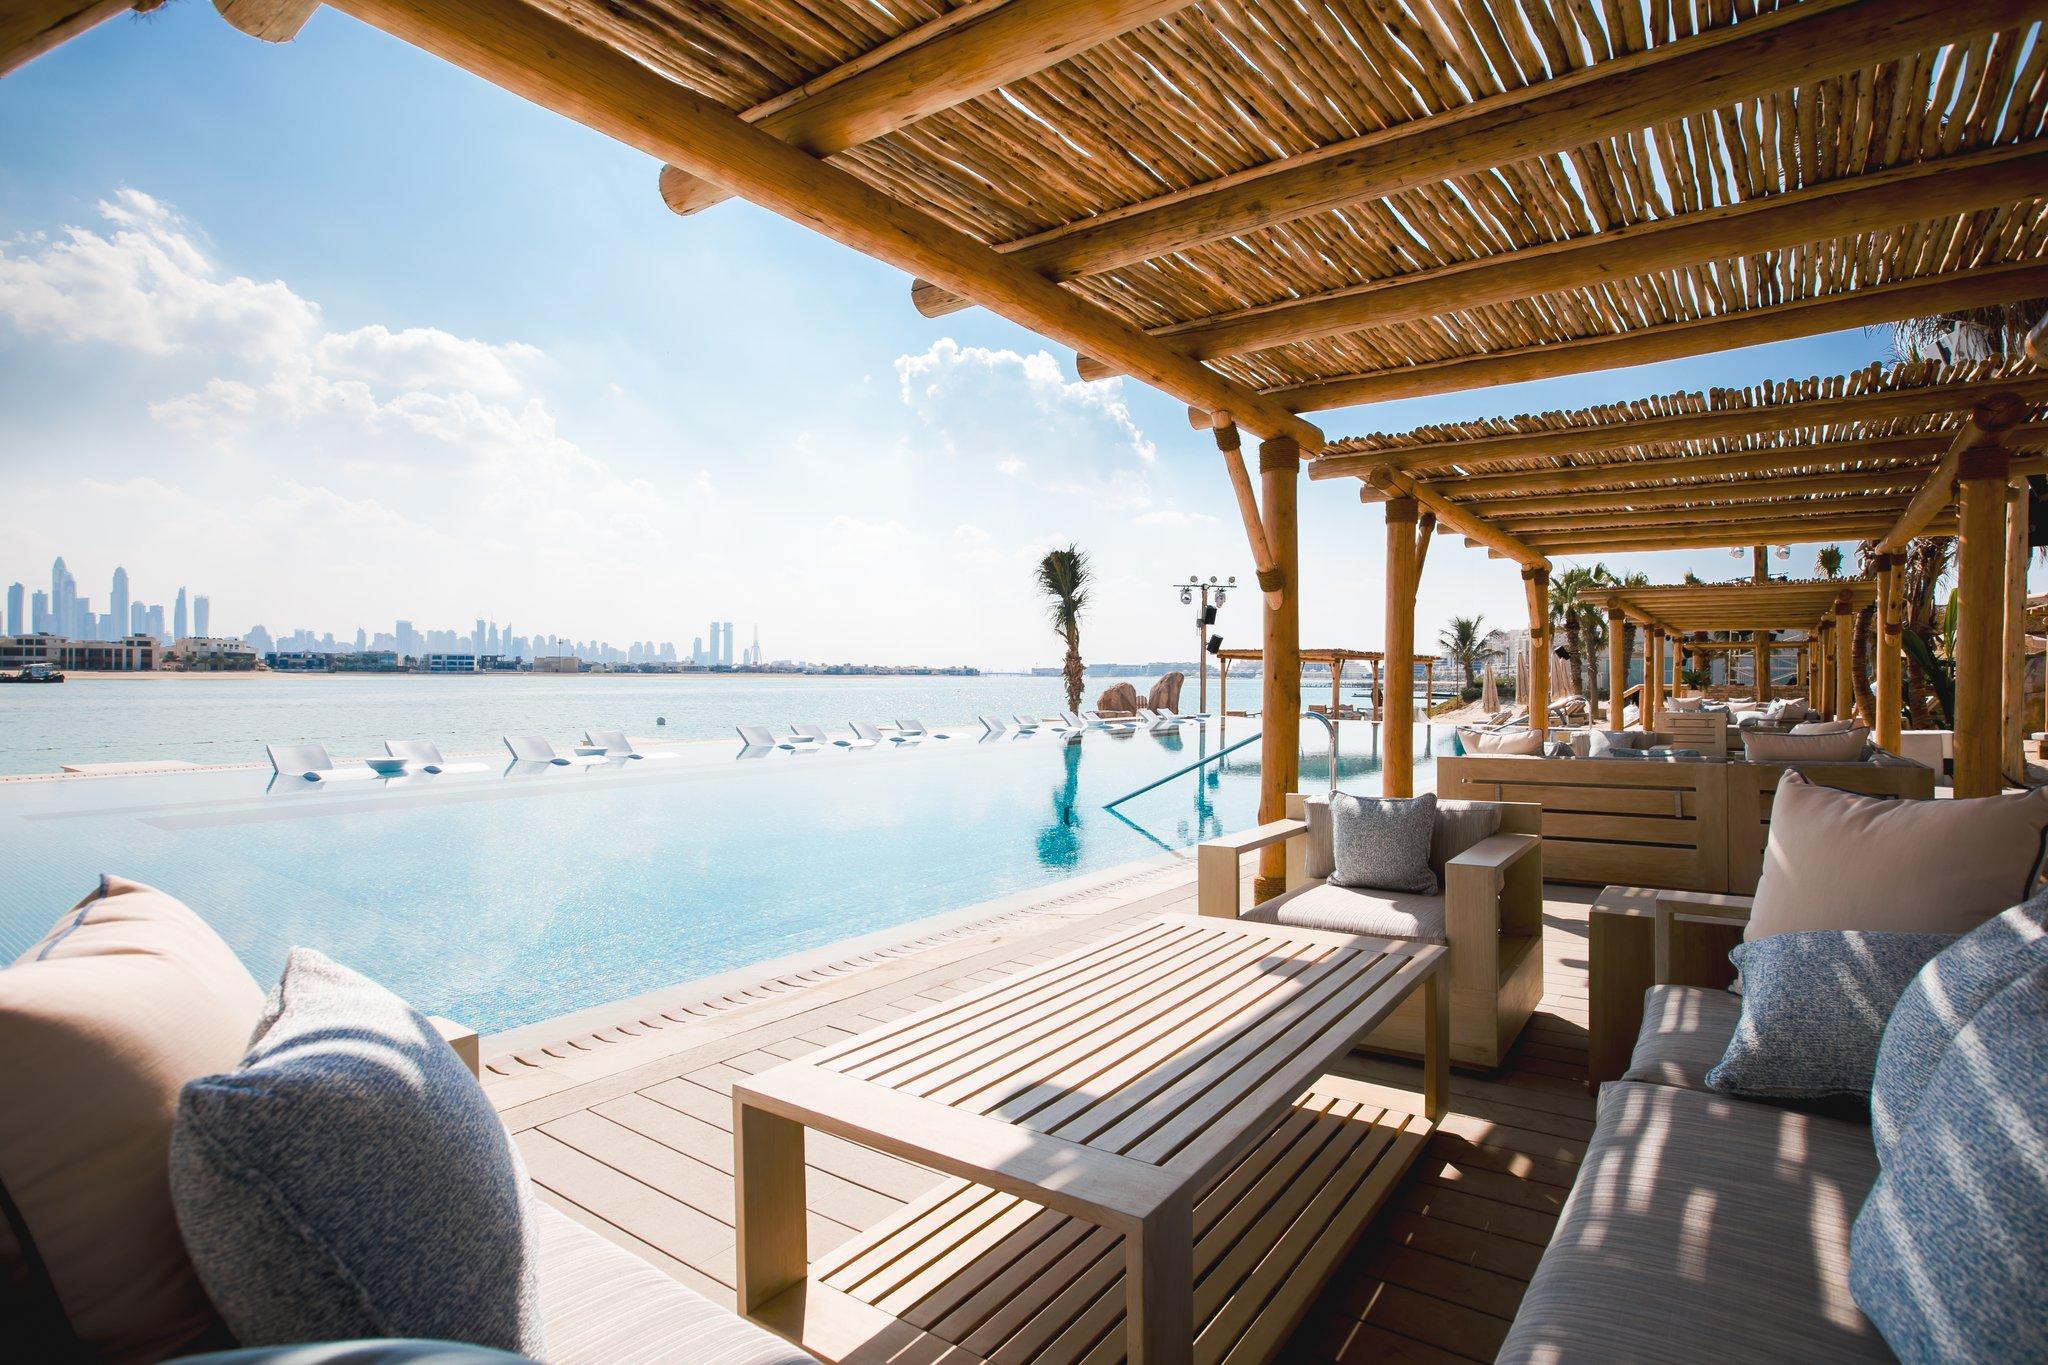 Hotels to do in Dubai-Atlantis The Palm Dubai